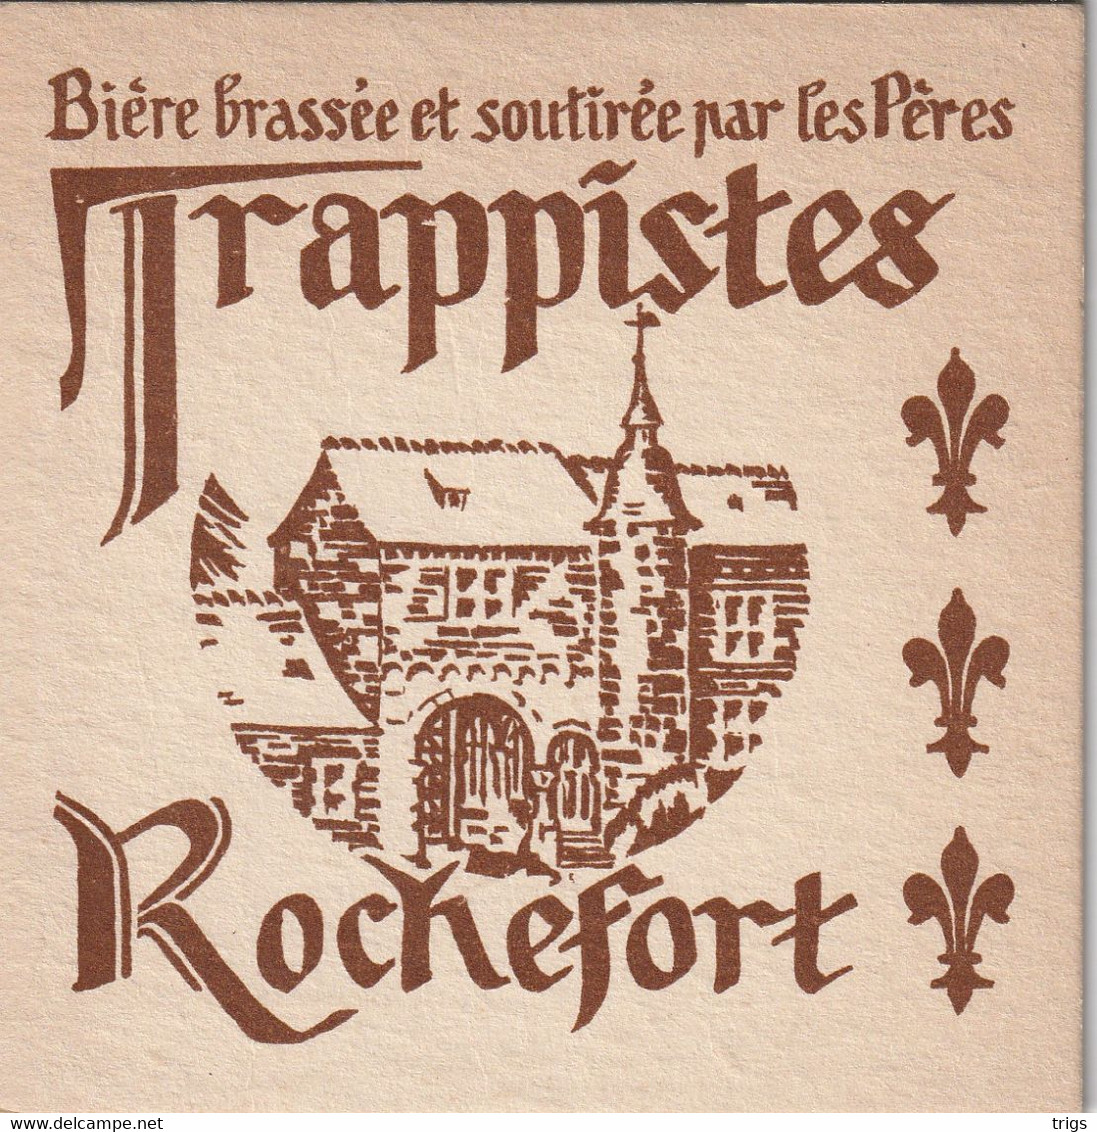 Trappistes Rochefort - Posavasos (Portavasos)